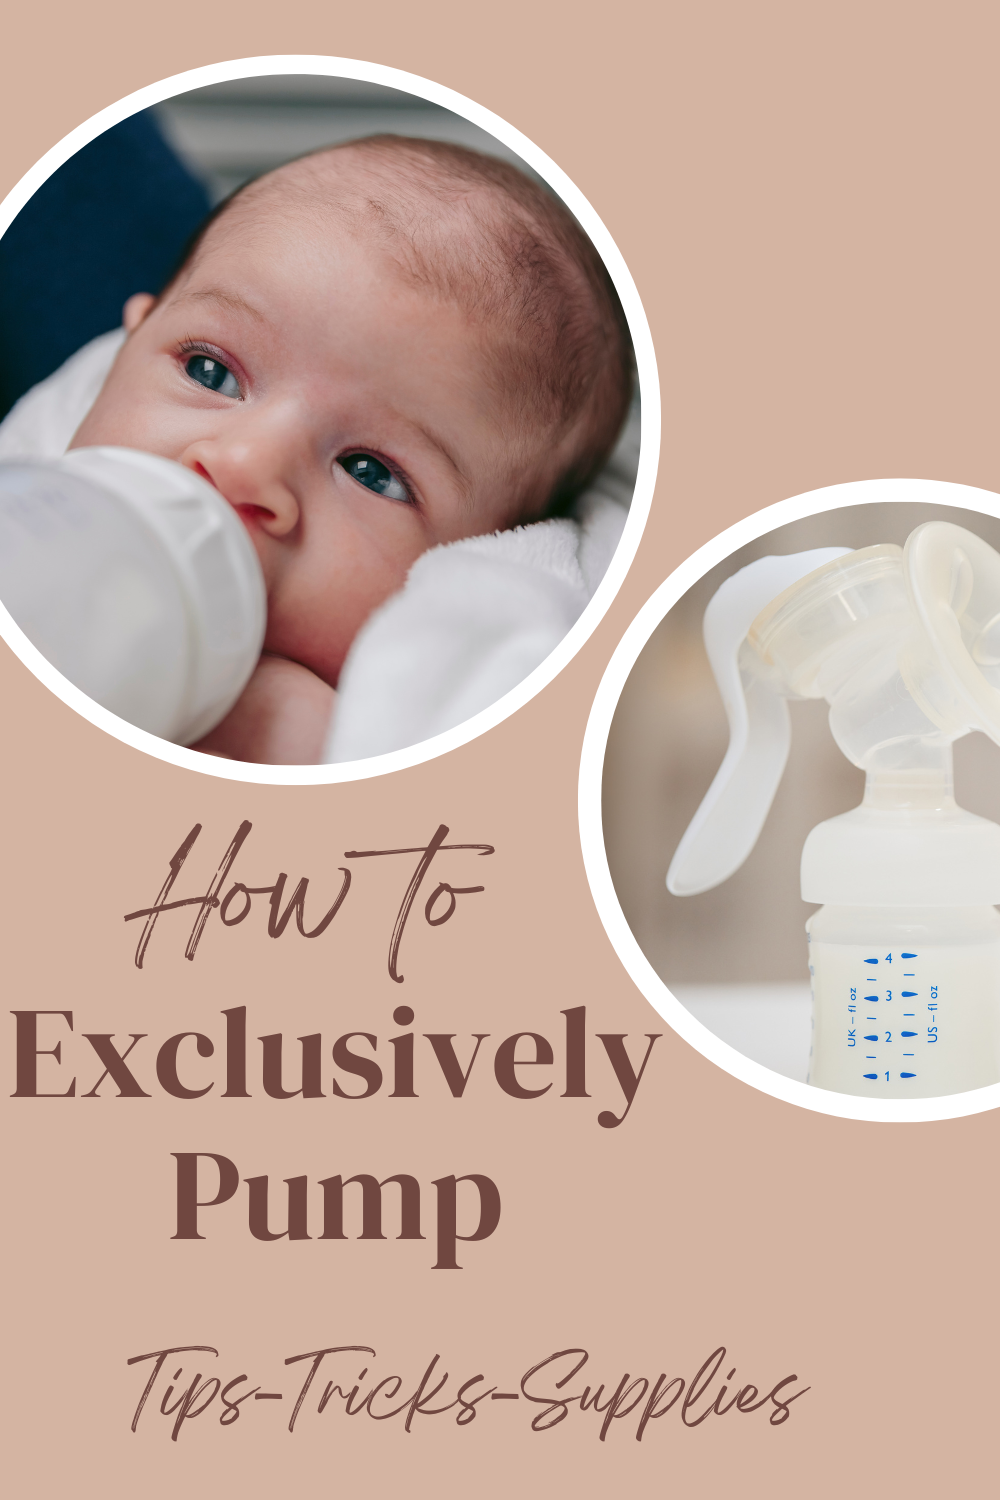 Exclusive Pumping 101 : What I wish I knew! | by Rmotherhood Mama | Medium